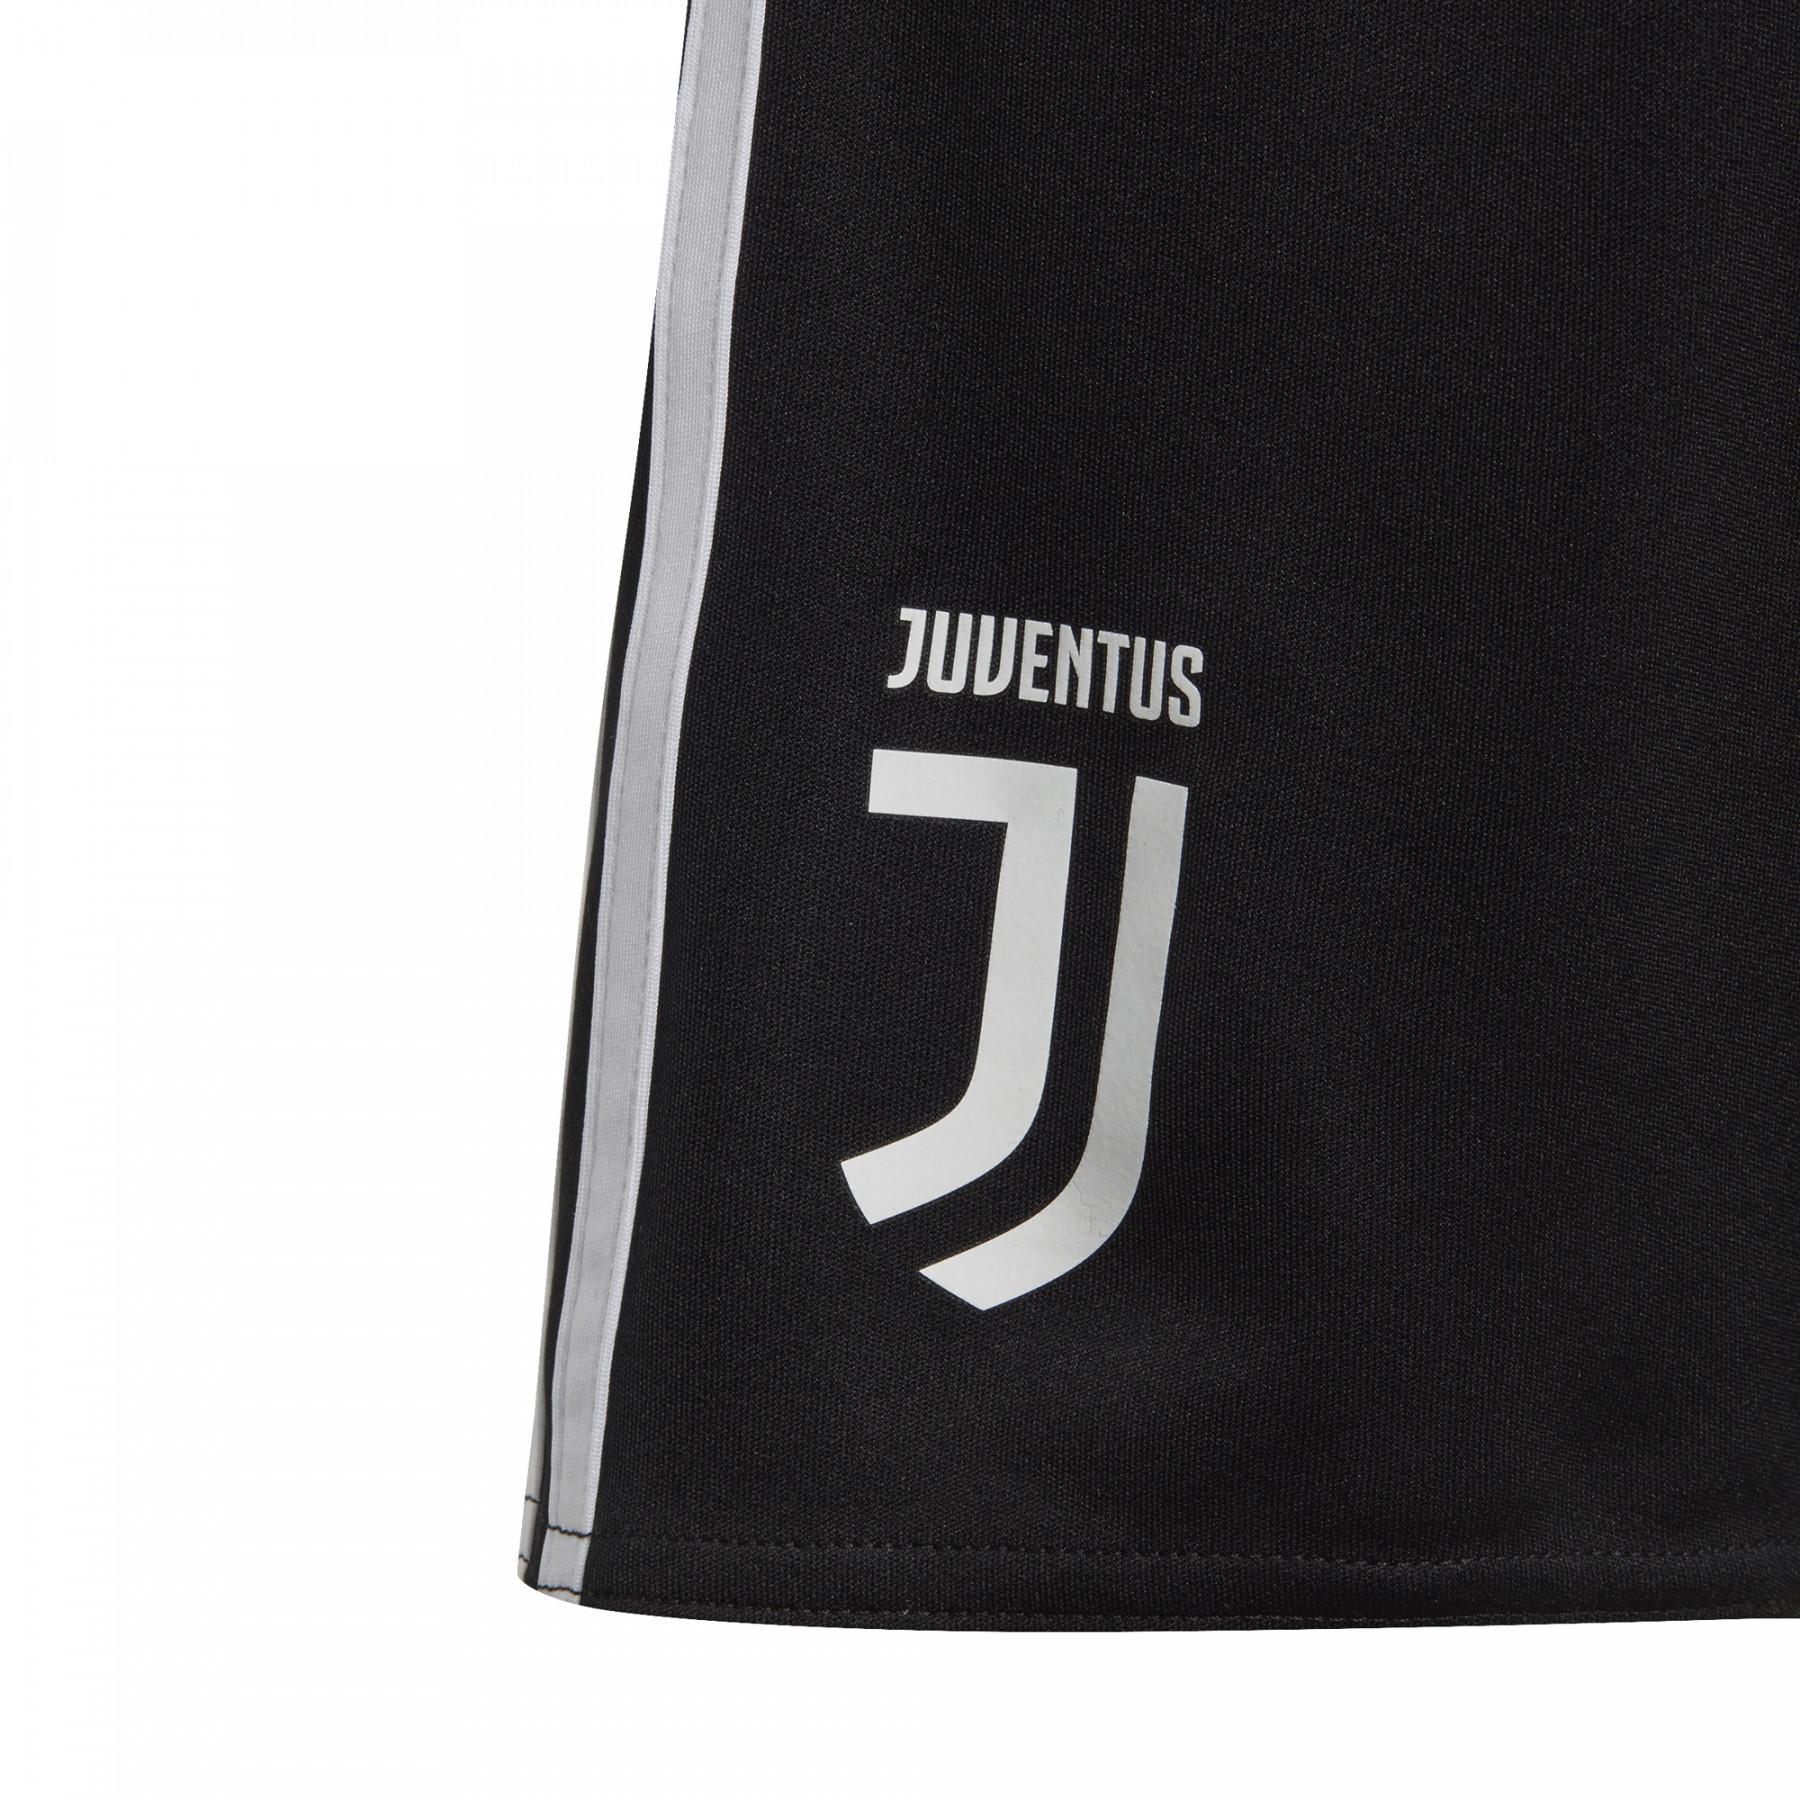 Mini home kit Juventus 2019/20